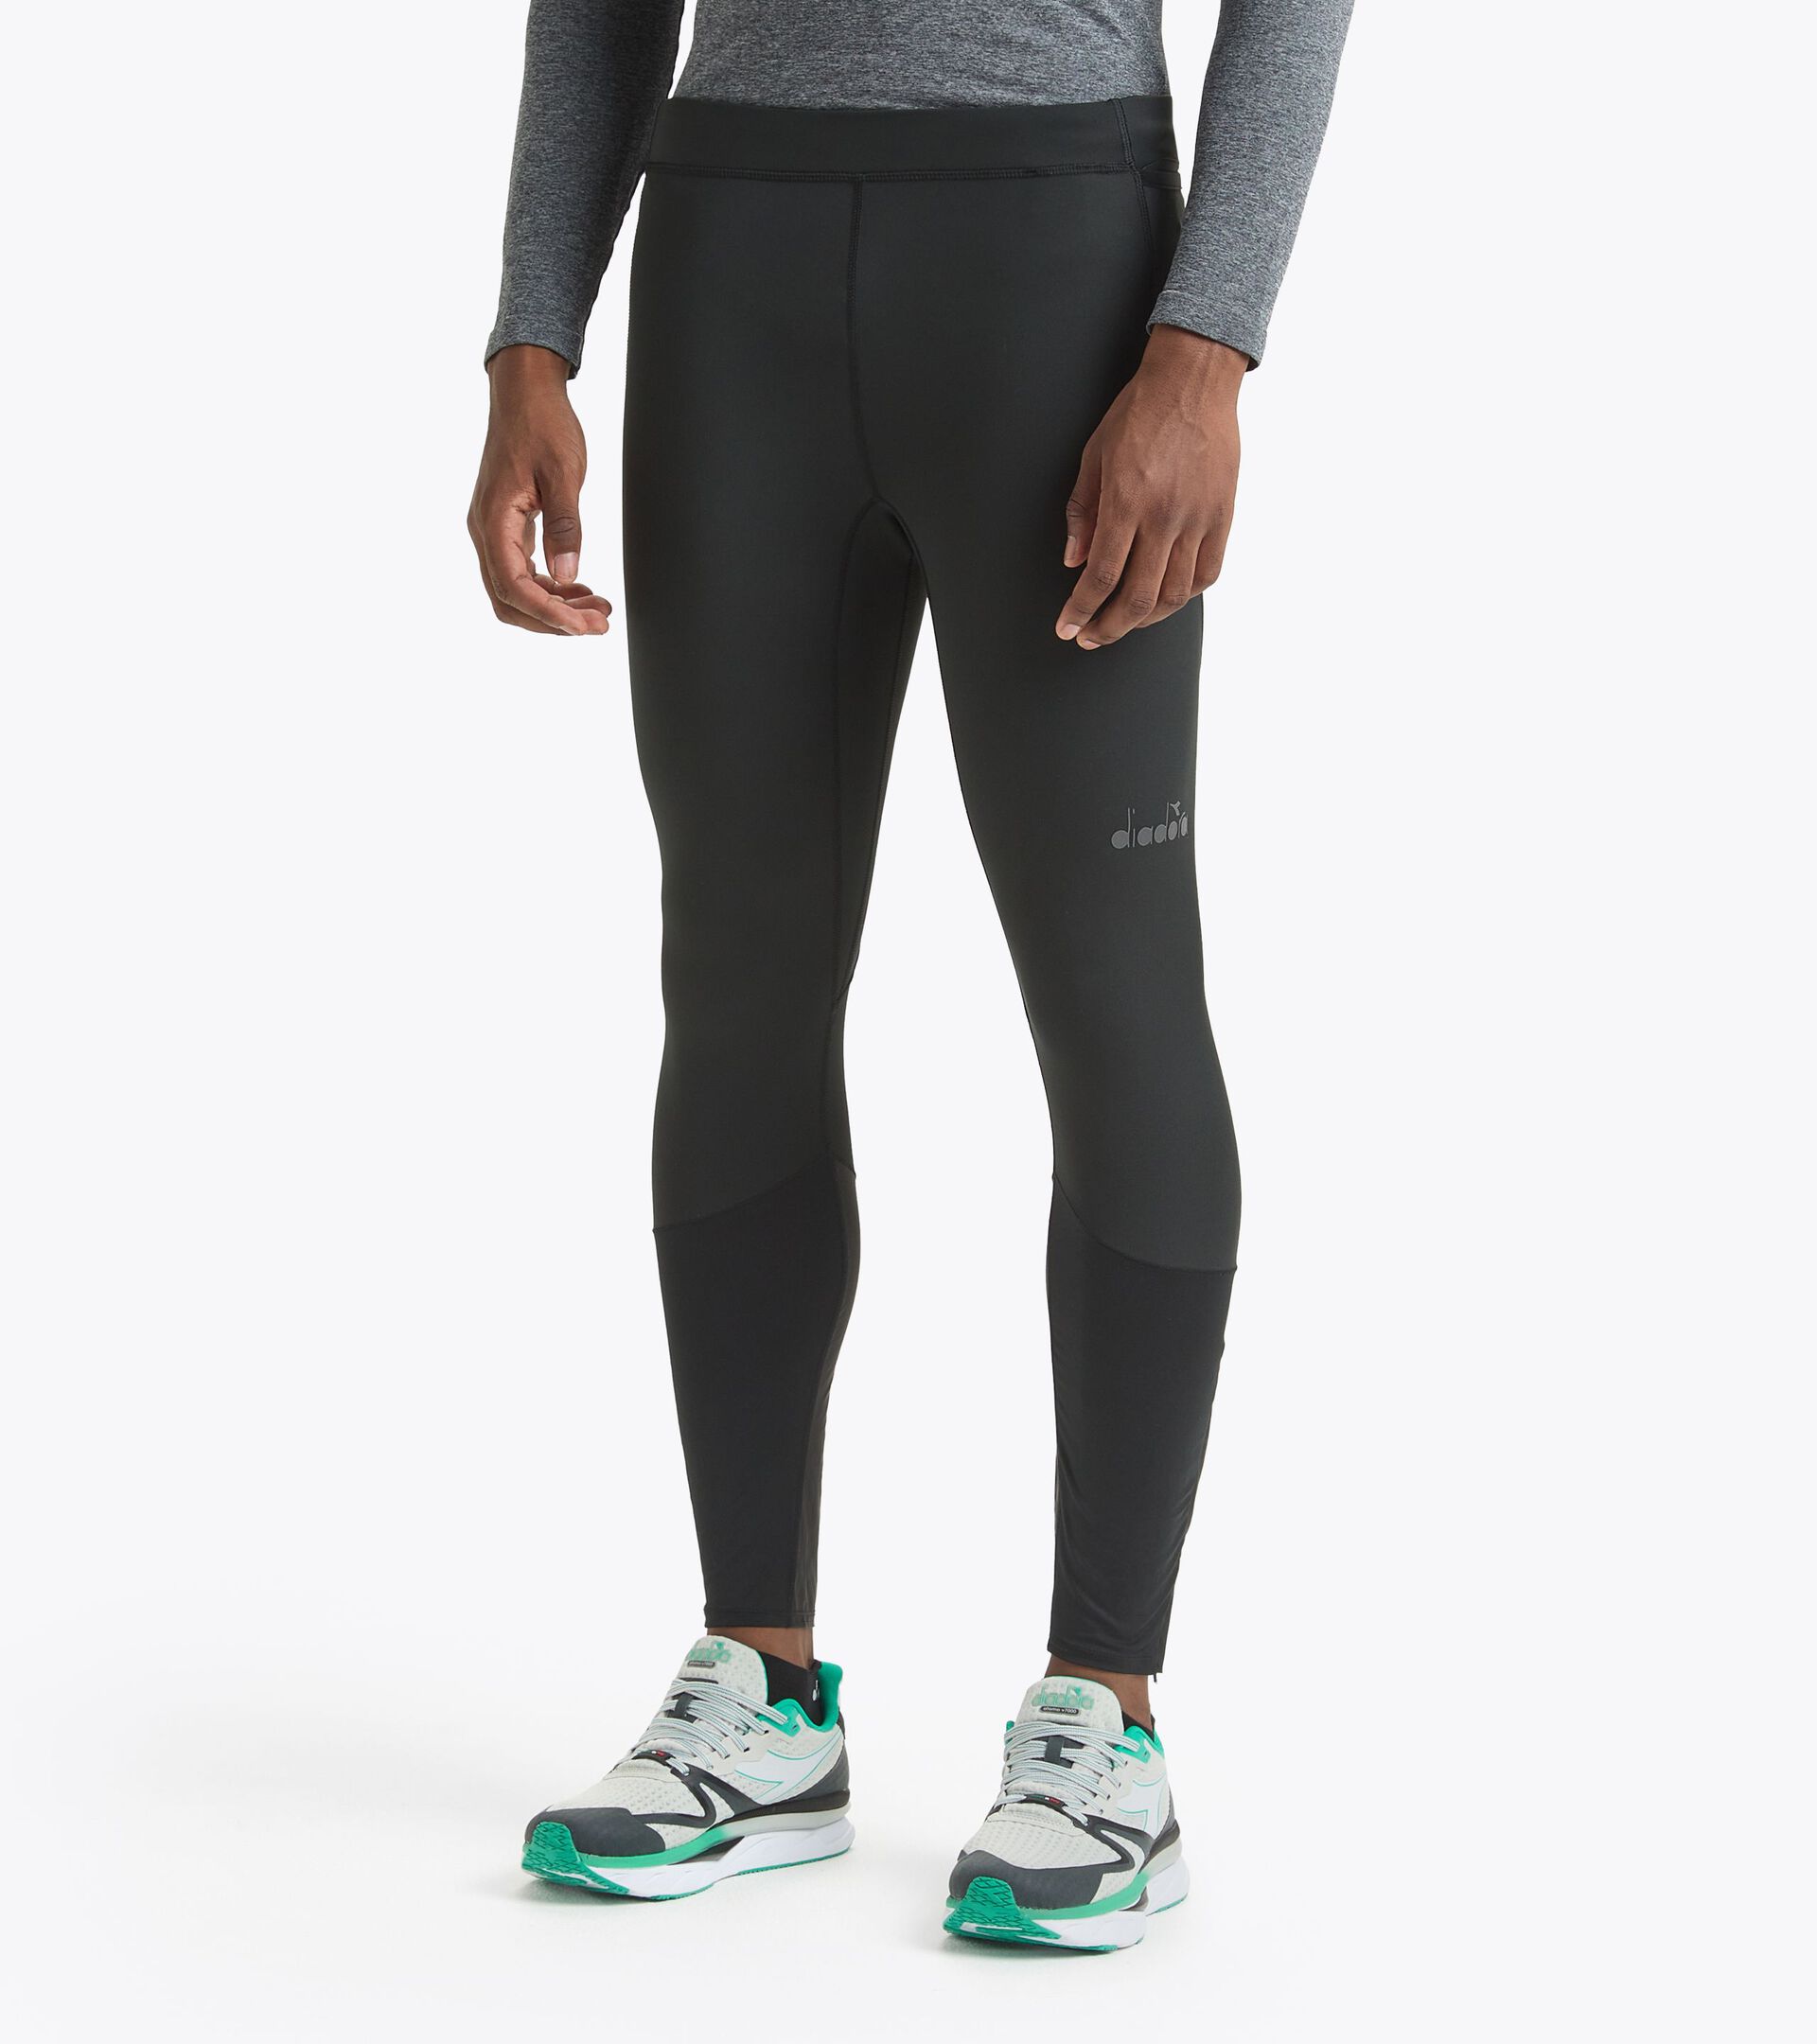 Men's Sports Lycra Running Leggings Tights Zipper Pocket High Quality –  Graphic Gear